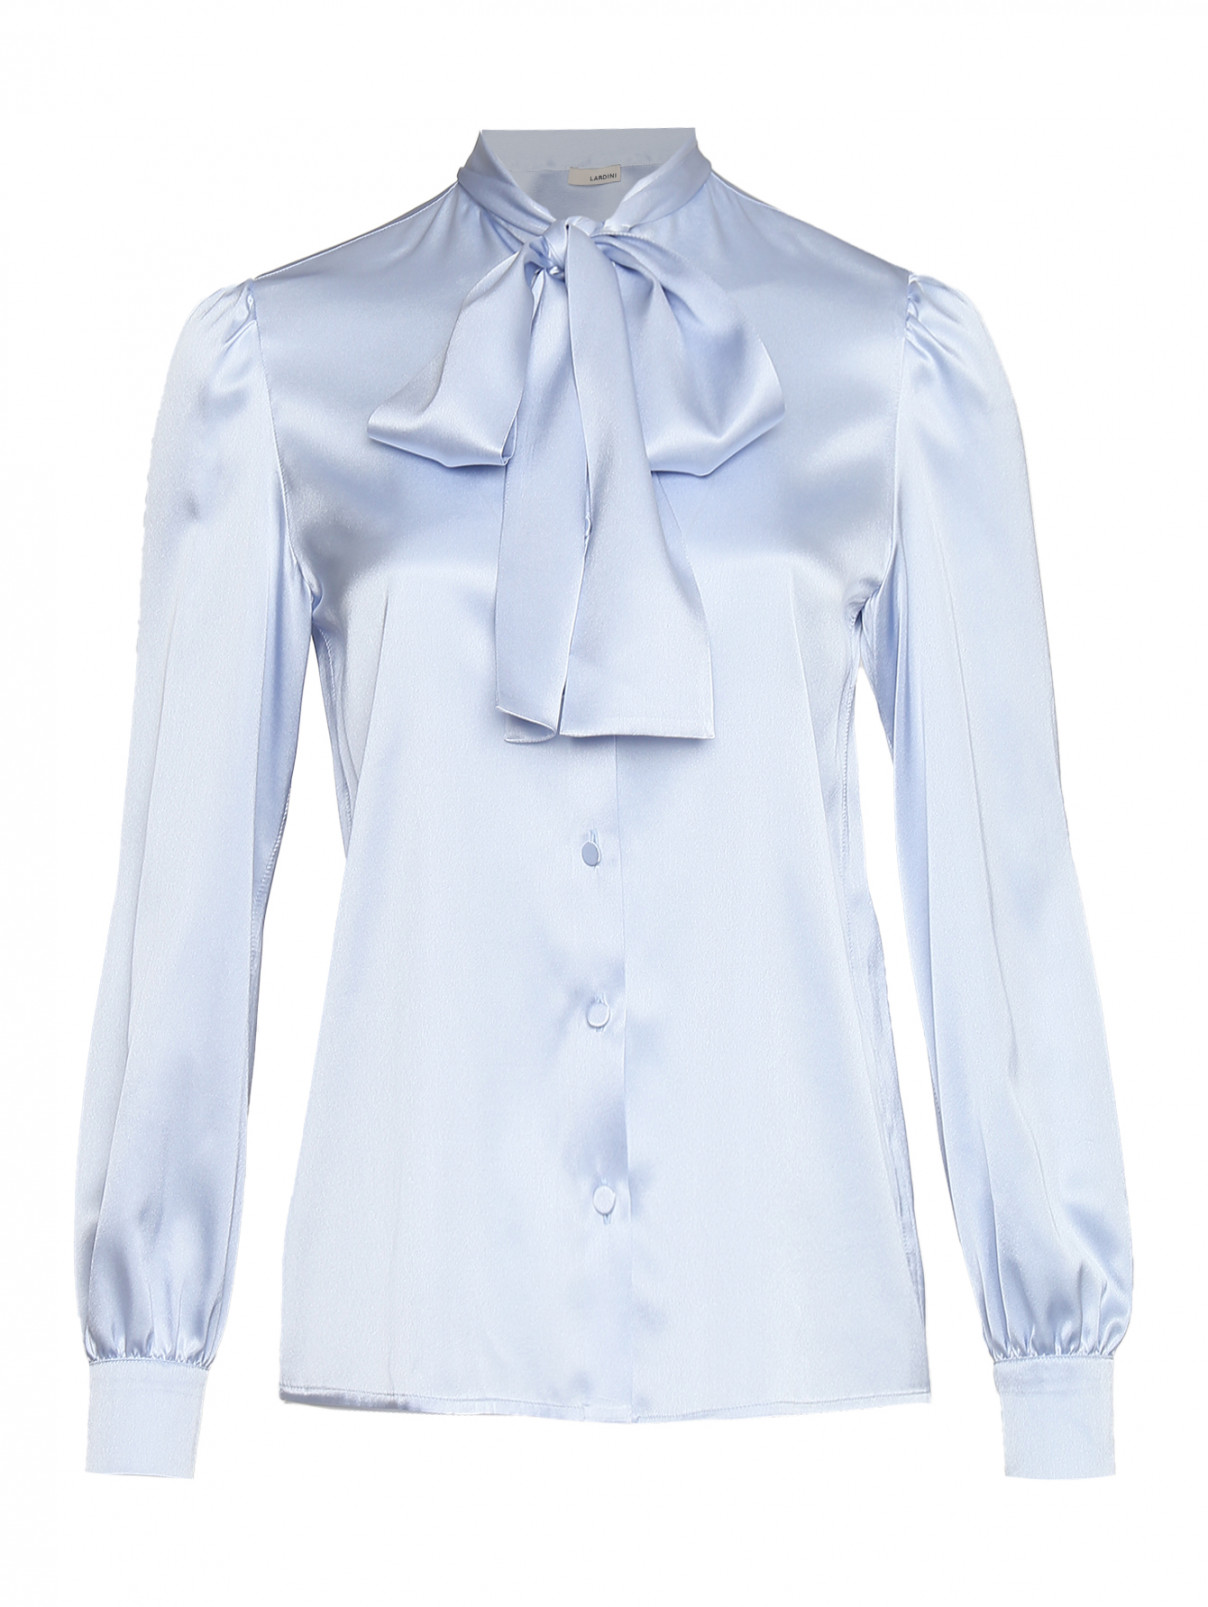 Блуза из шелка с бантом LARDINI  –  Общий вид  – Цвет:  Синий